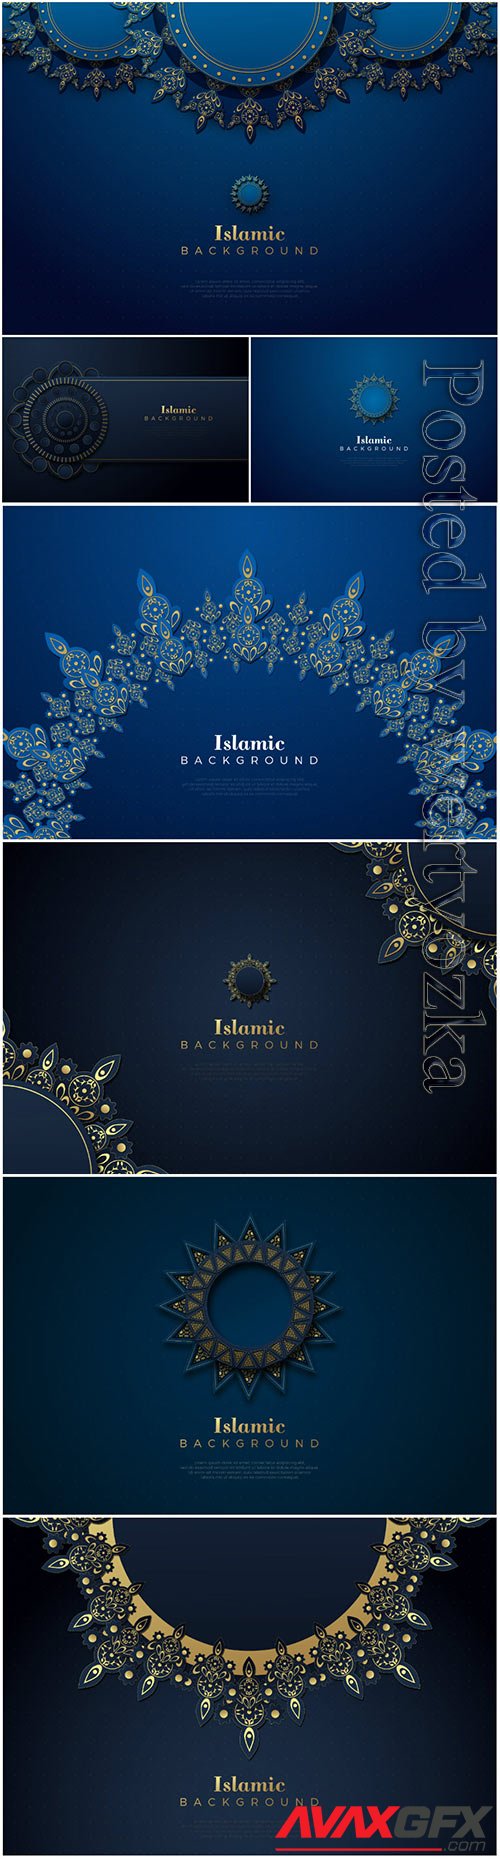 Islamic background with elegant gold circle ornament